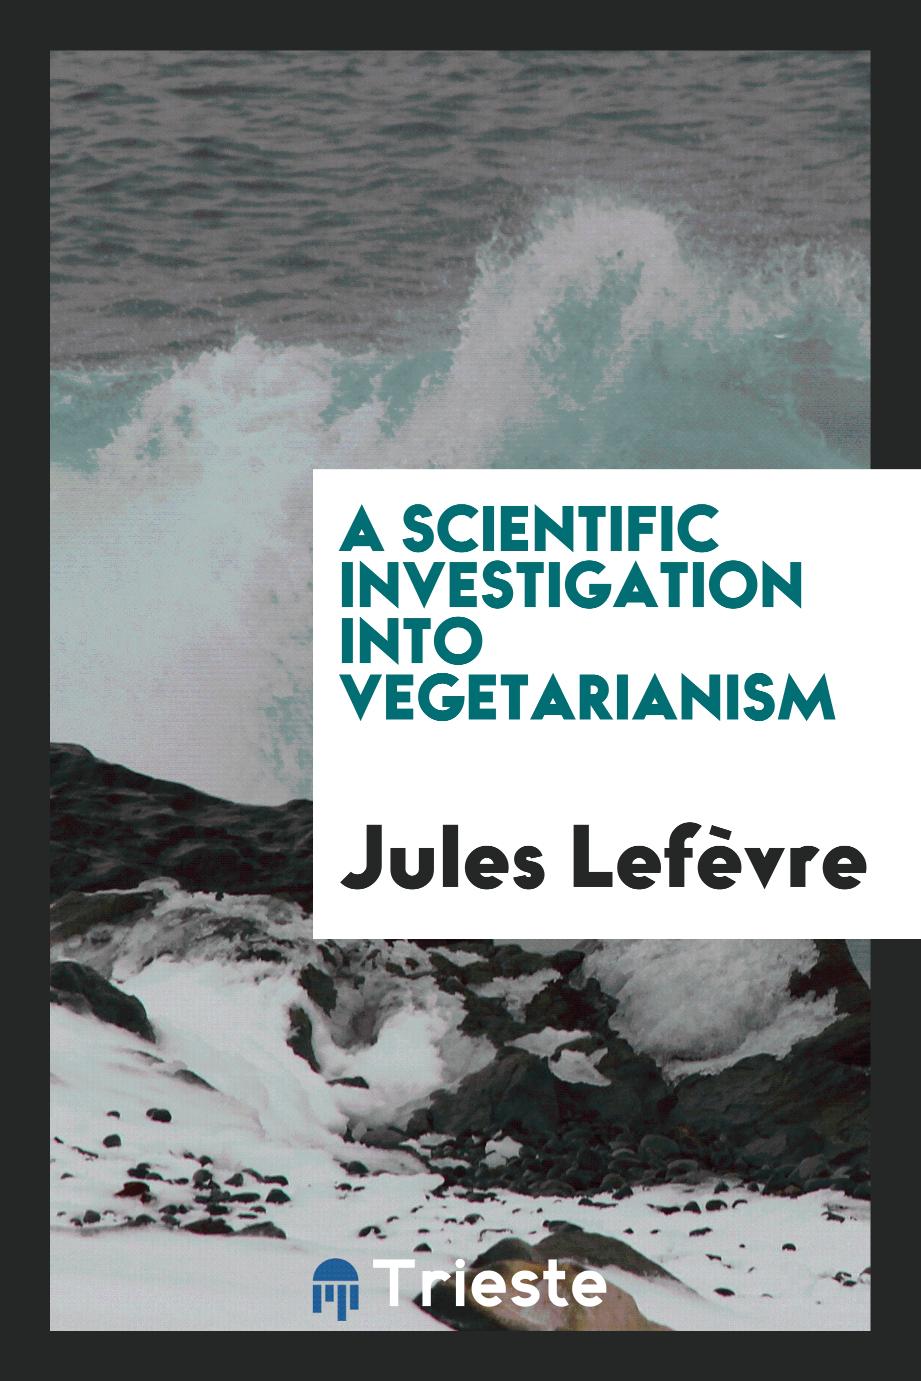 A scientific investigation into vegetarianism